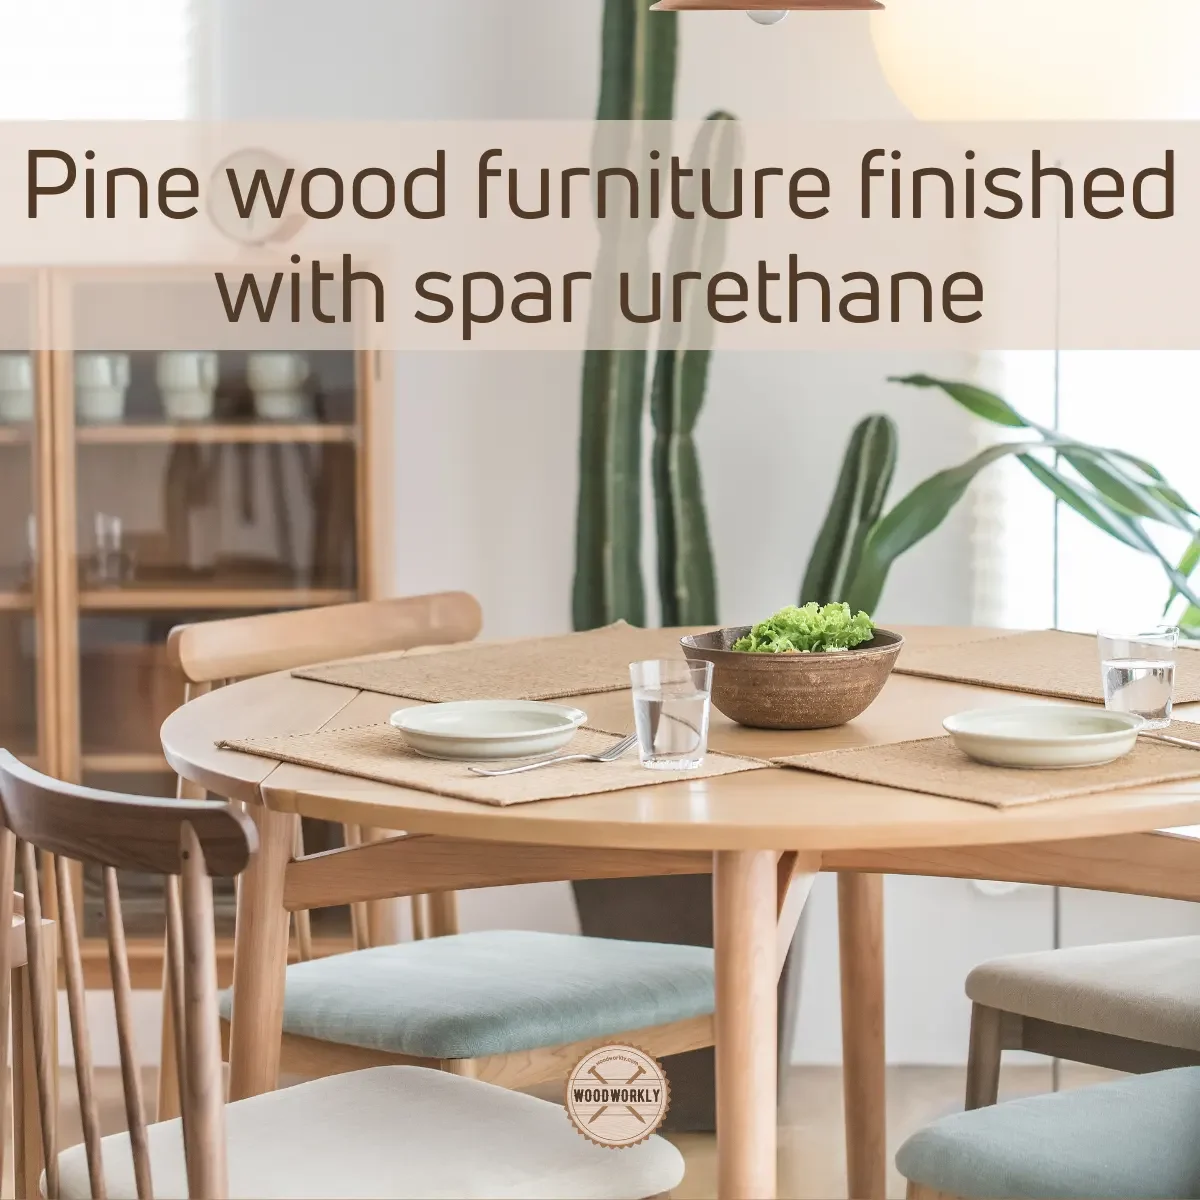 Pine wood furniture finished with spar urethane